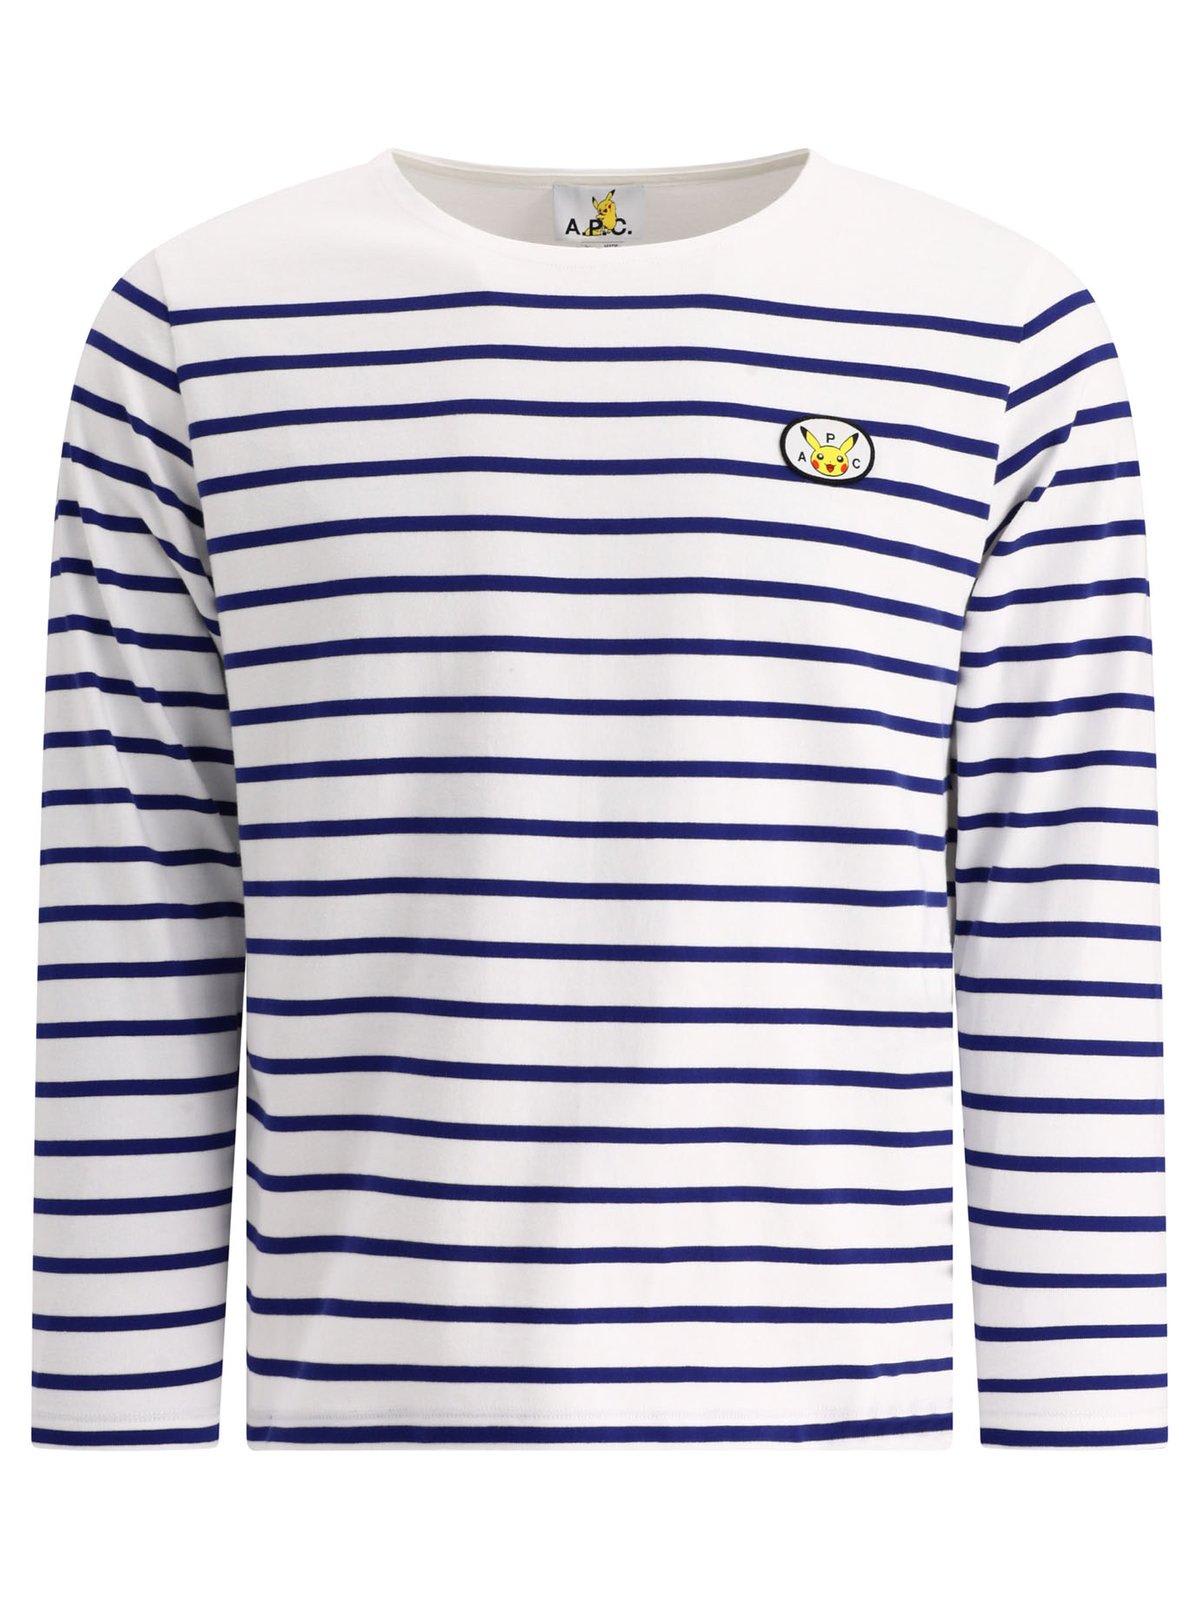 Striped Crewneck Sweatshirt